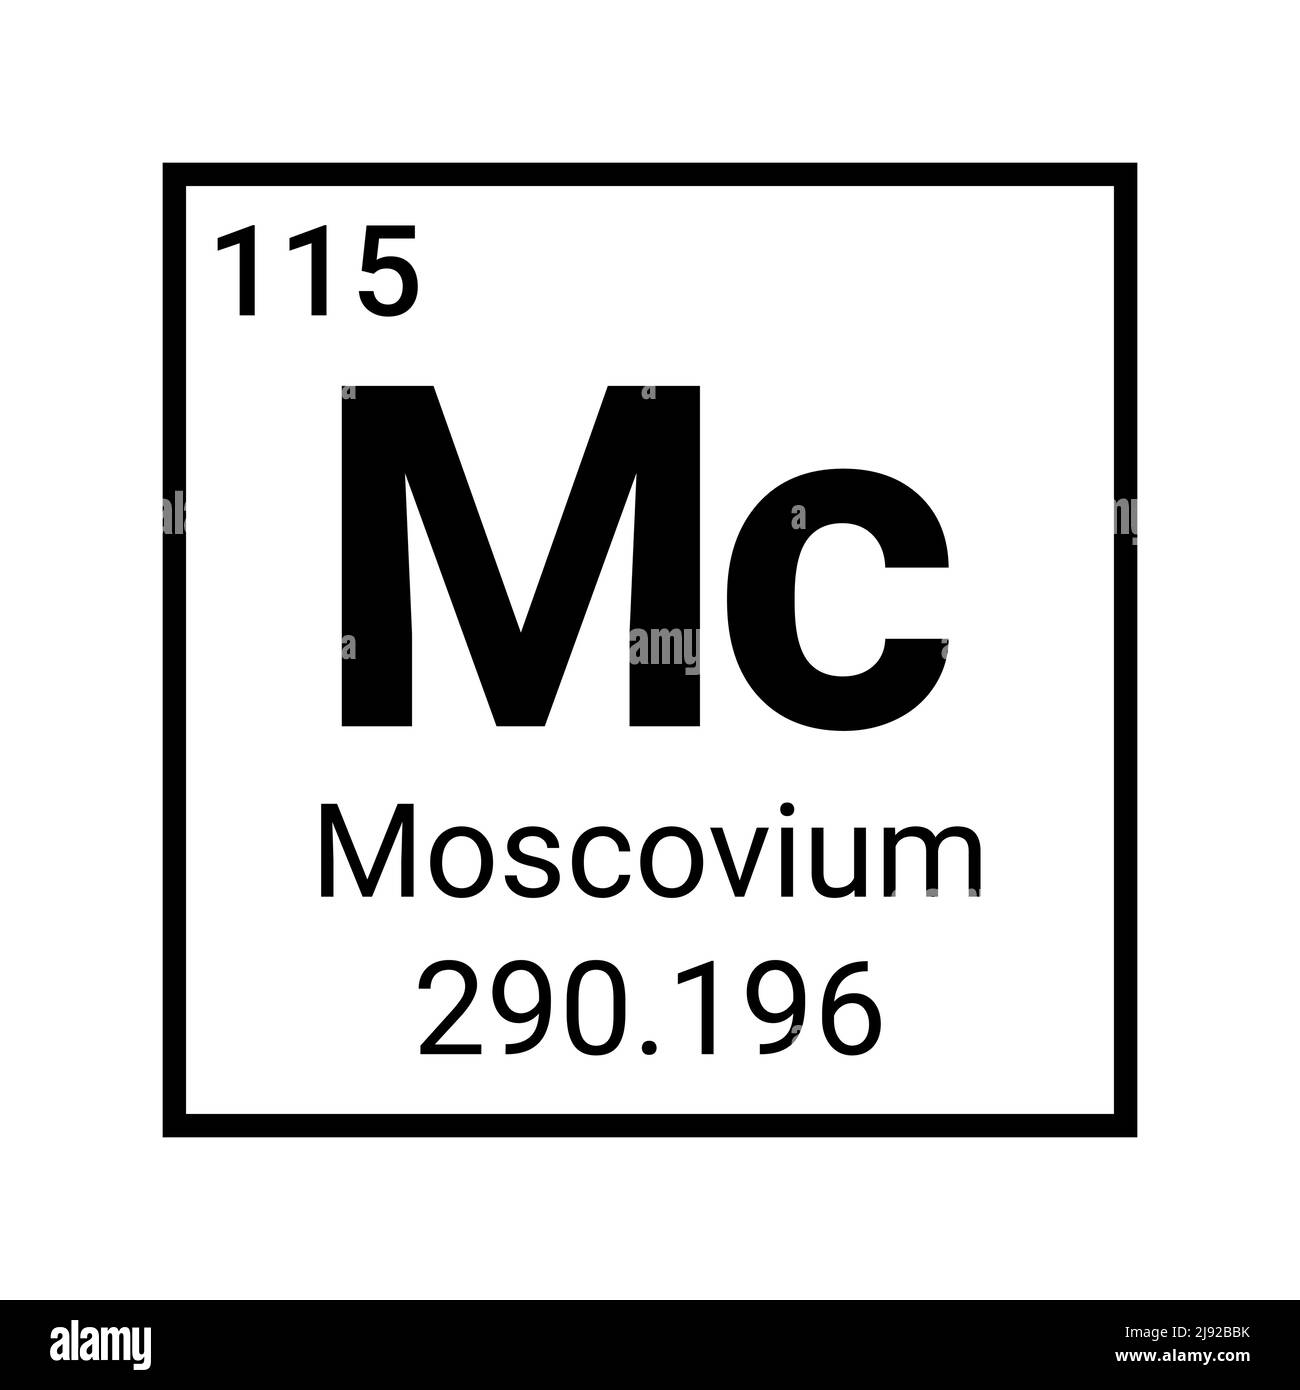 Moscovium periodic table element icon vector illustration Stock Vector